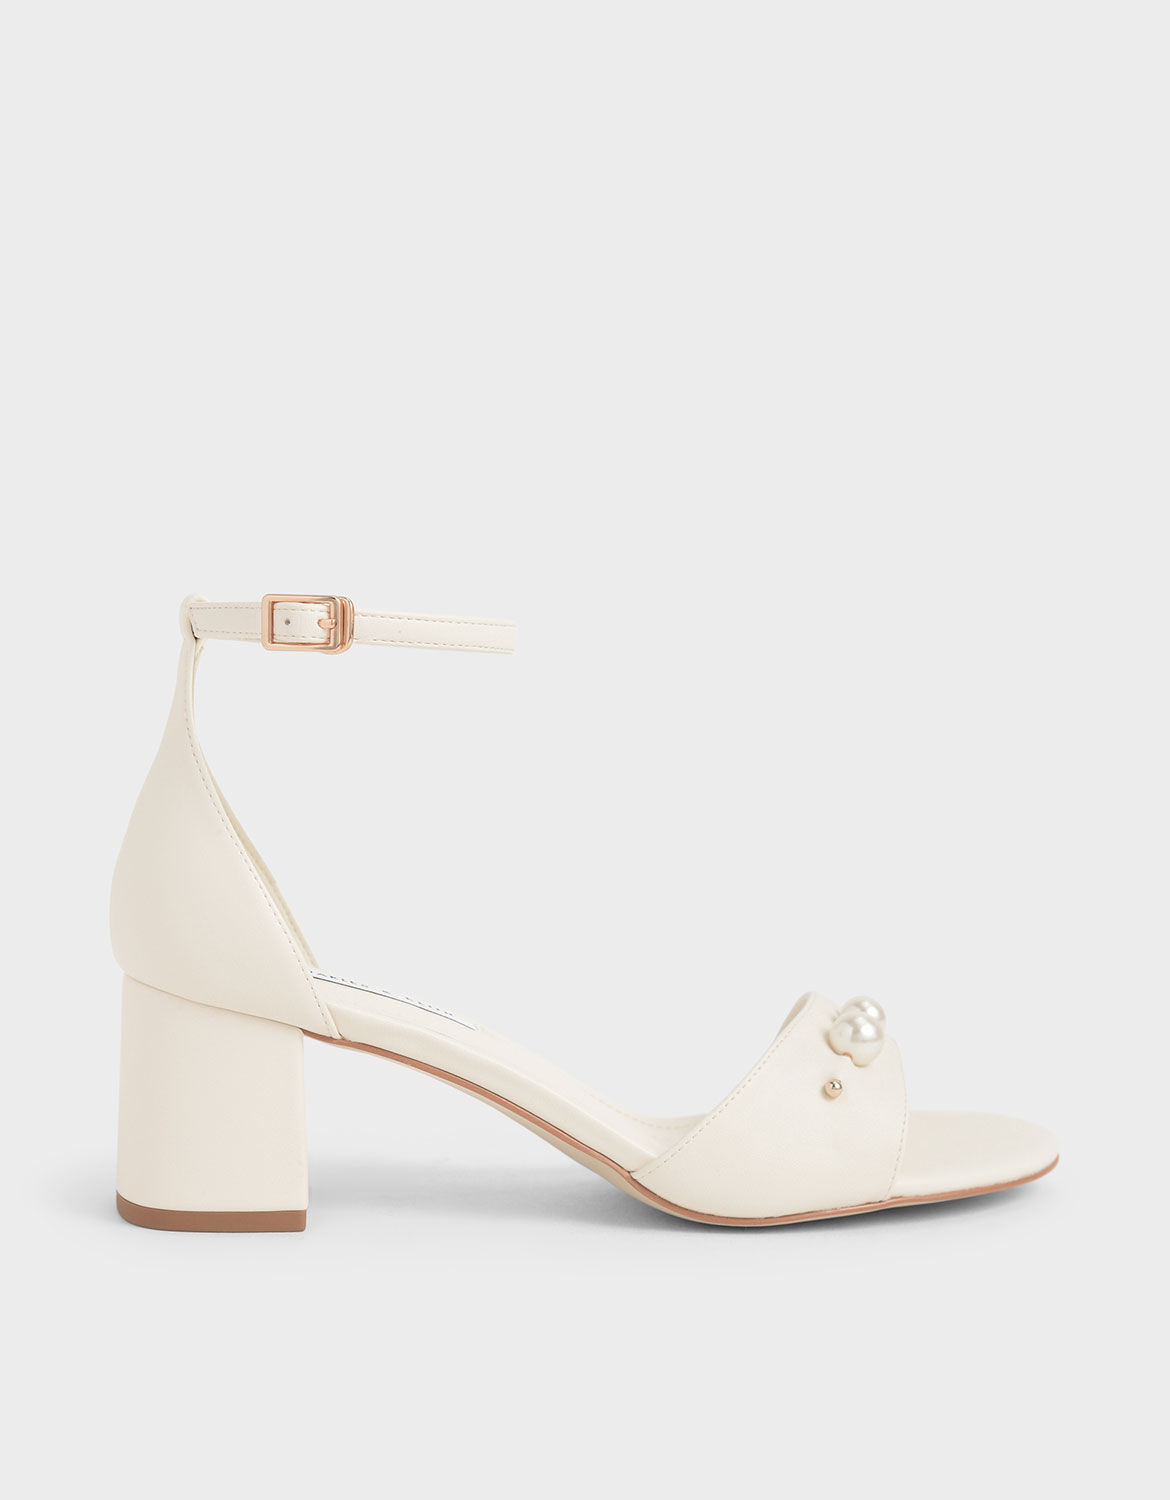 charles and keith block heels